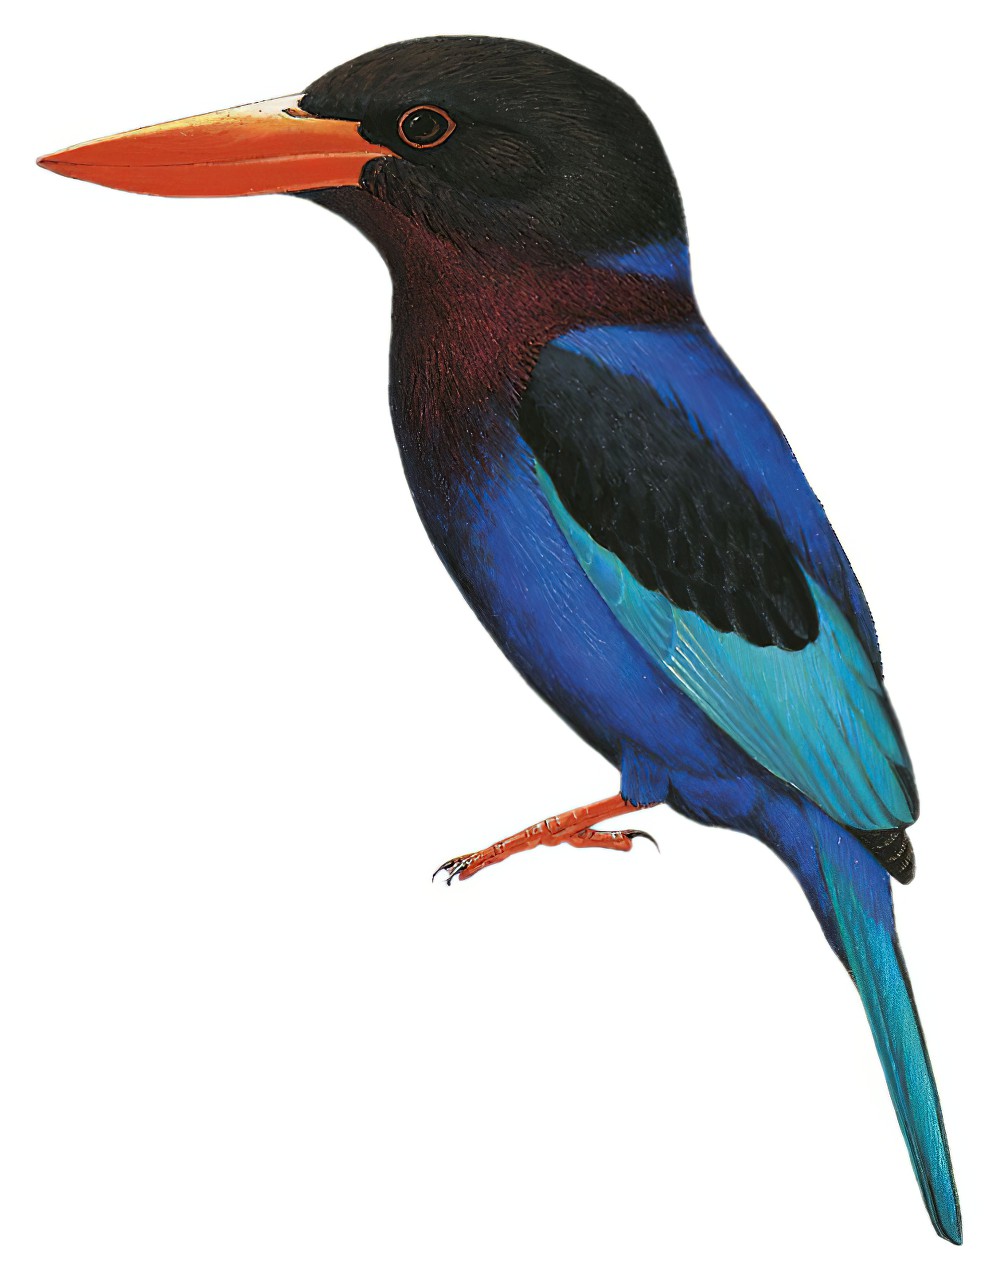 Javan Kingfisher / Halcyon cyanoventris